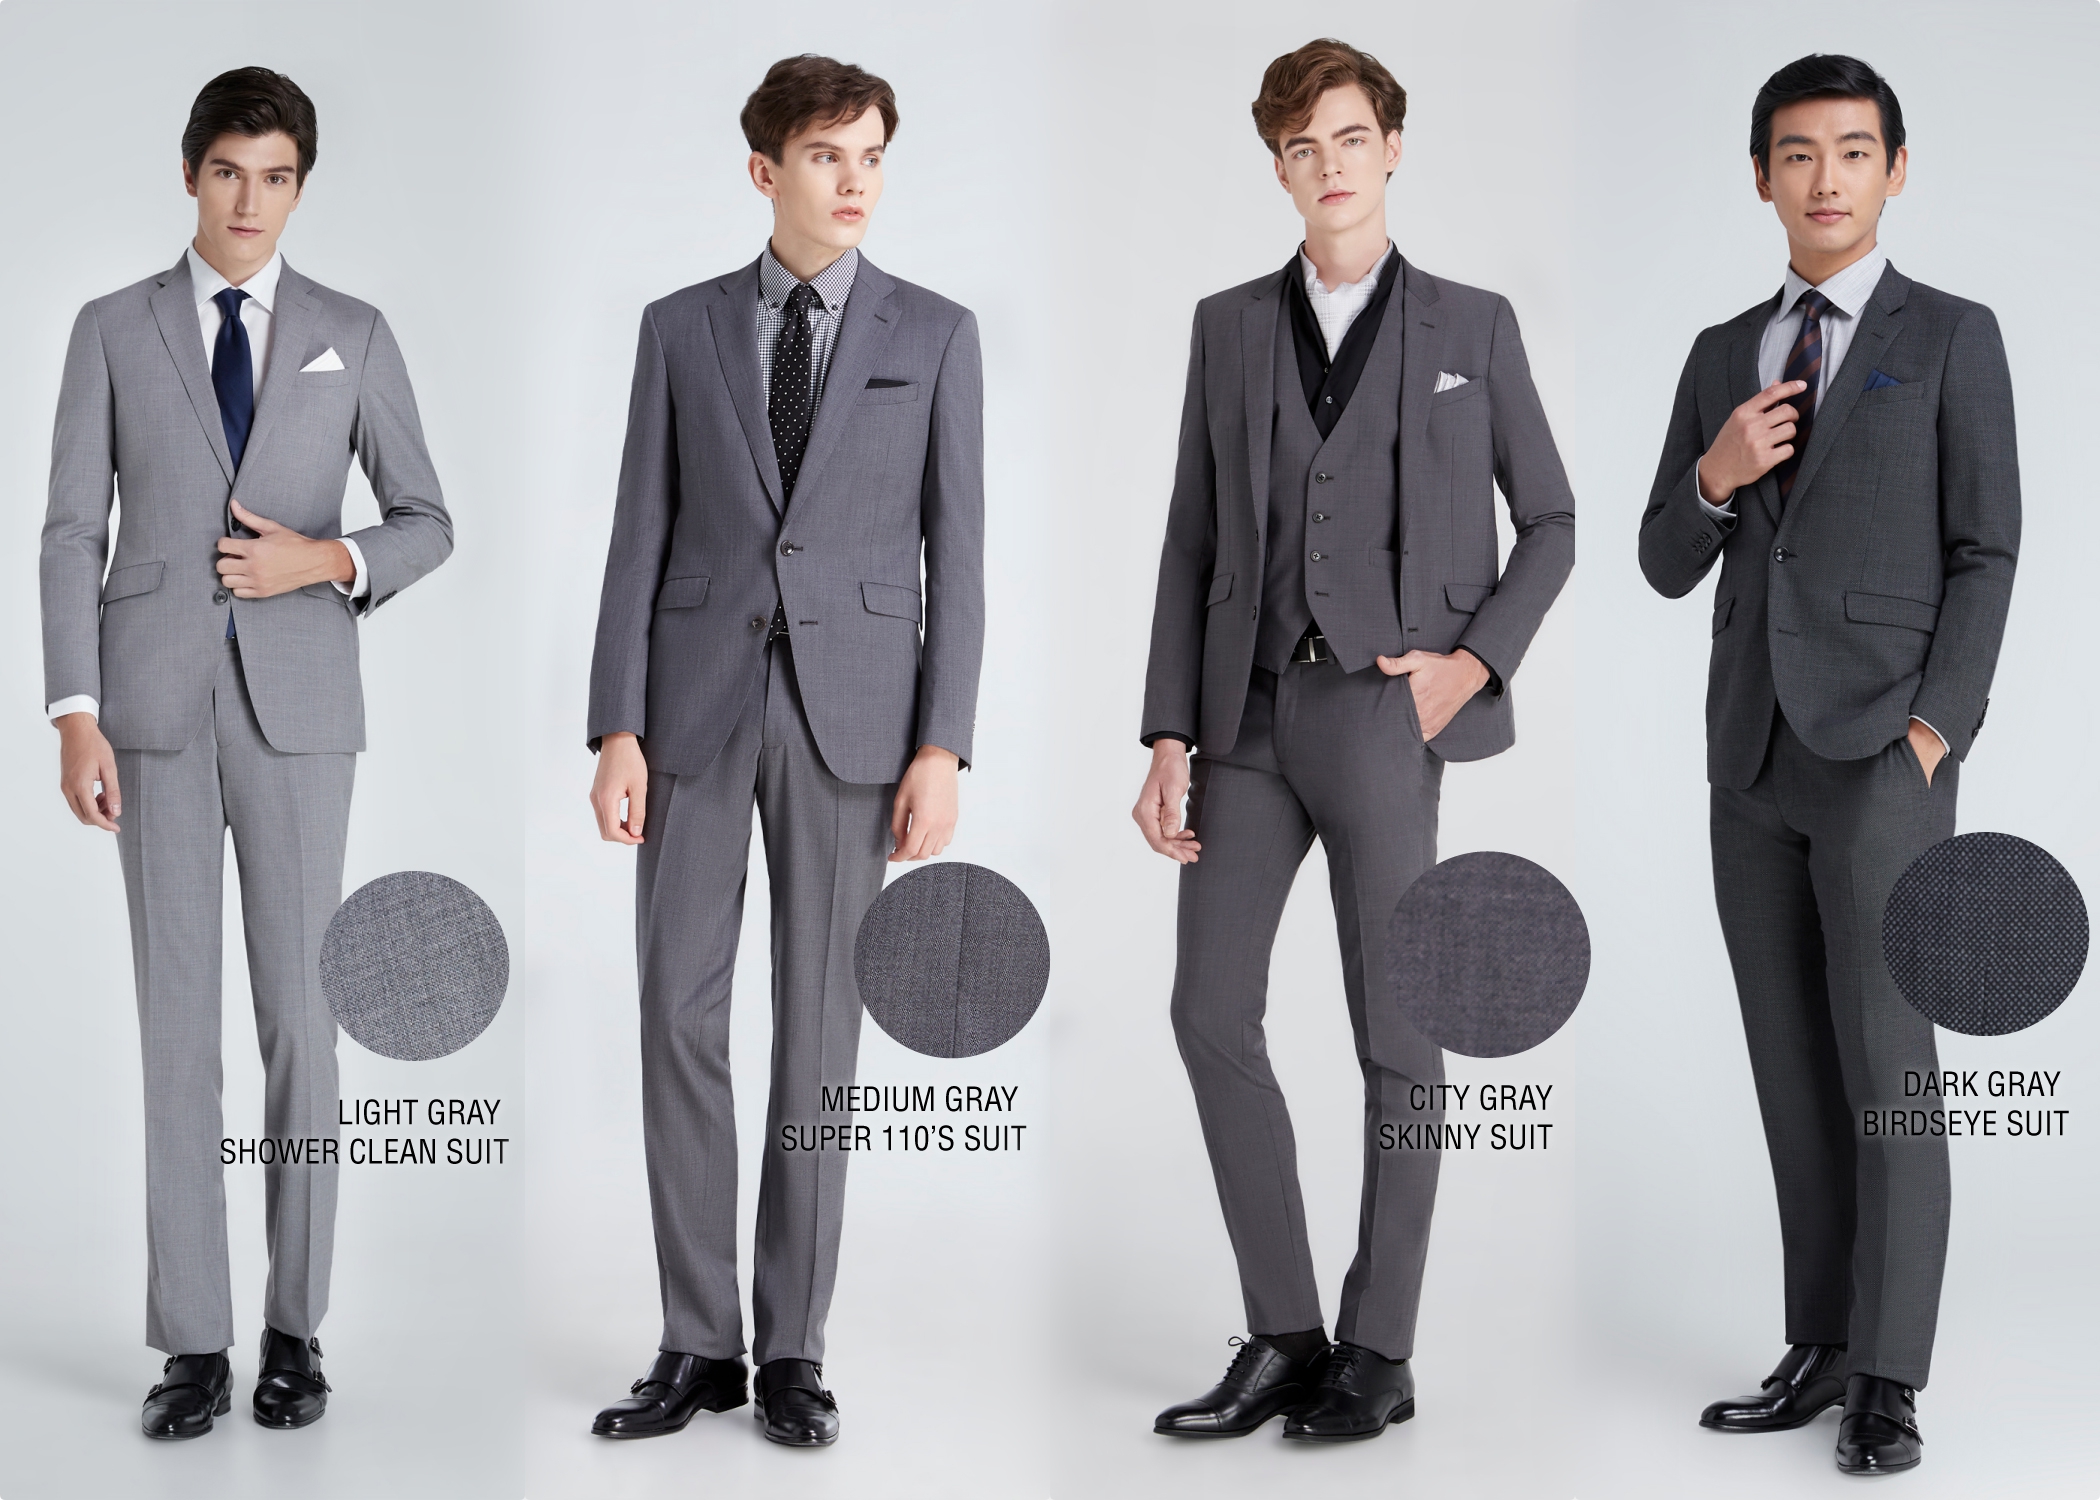 Gray suit variation! สูทเทาที่ไม่ได้มีแค่เฉดเดียวของSUIT SELECT